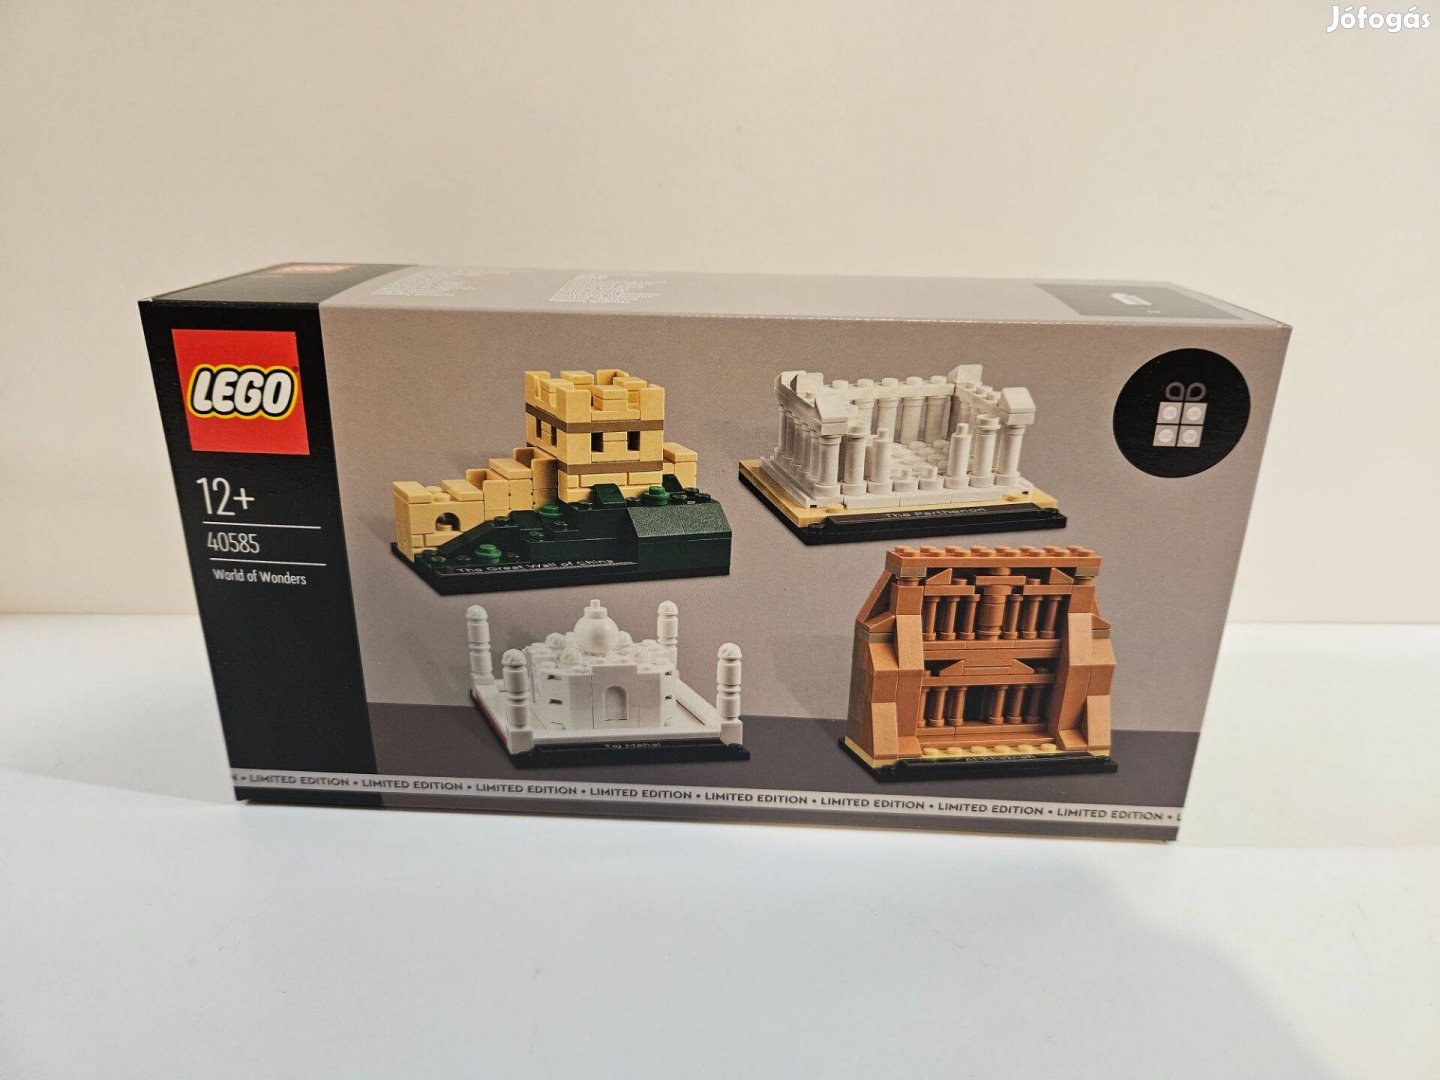 LEGO Promotional - 40585 - World of Wonders - Új